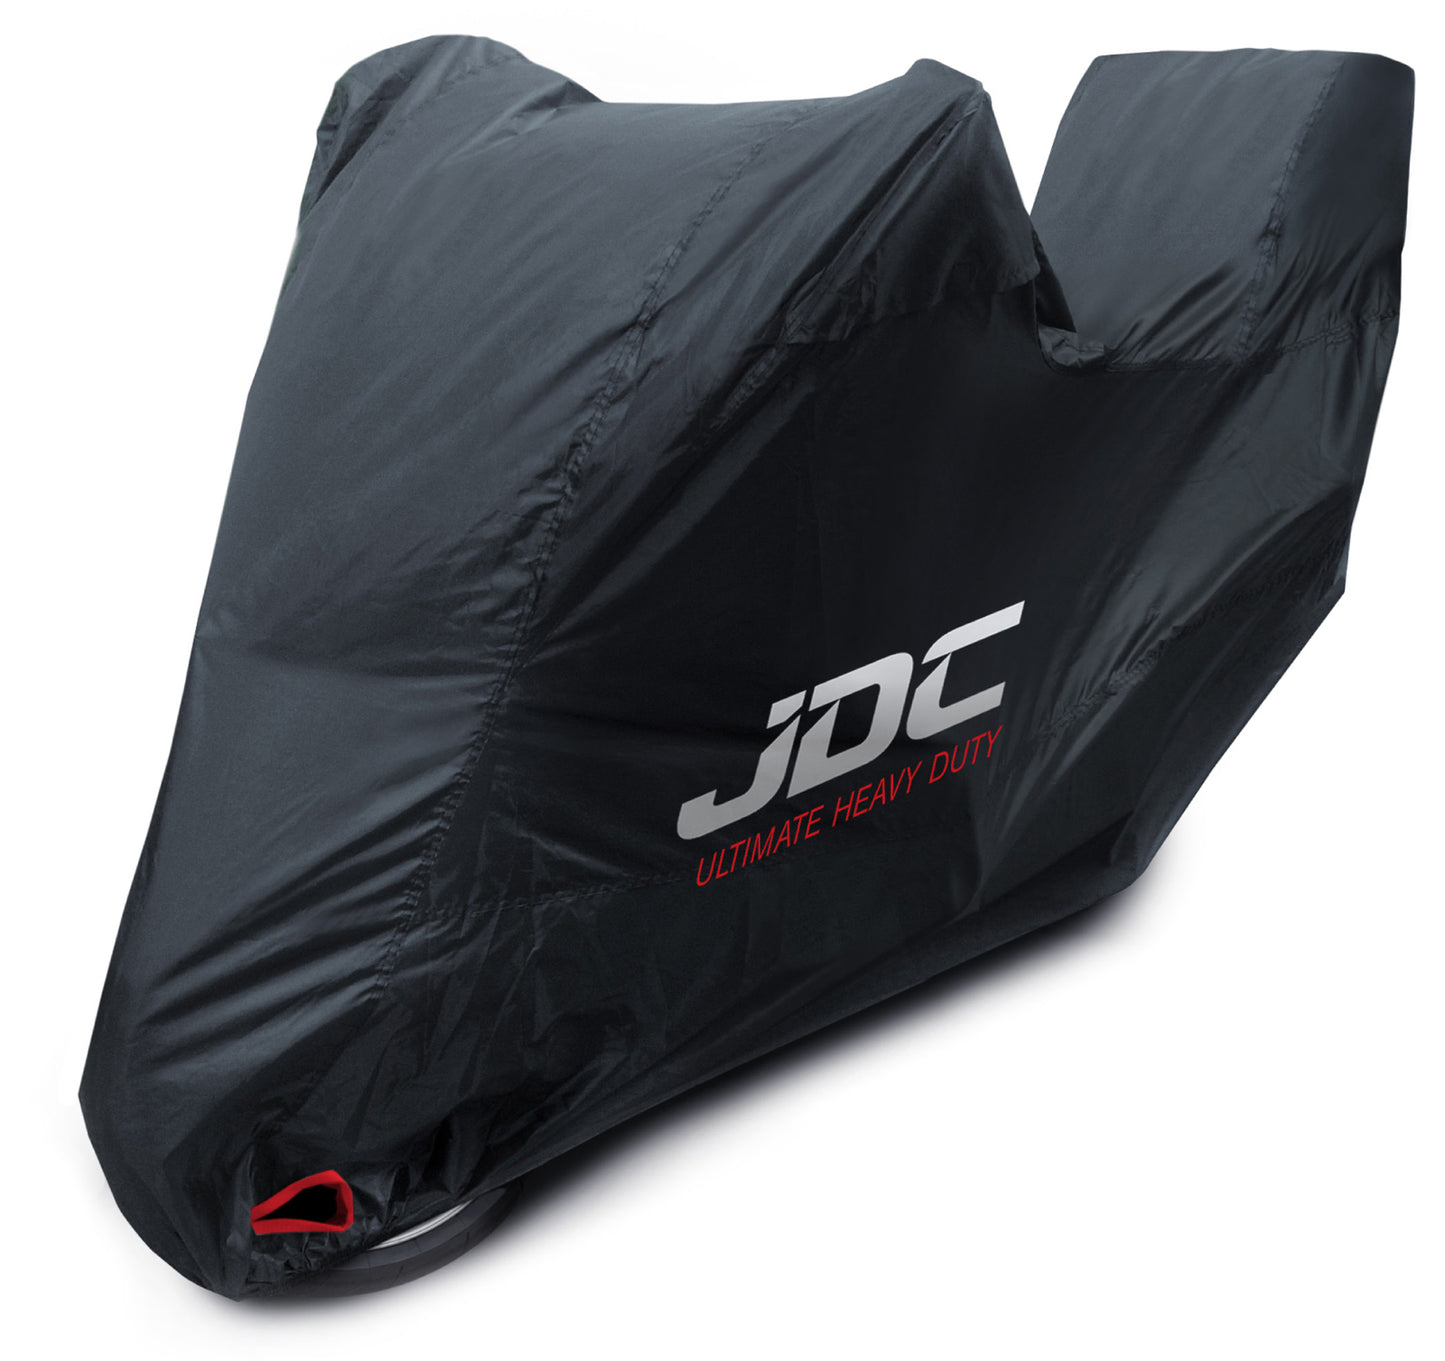 JDC Ultimate Heavy Duty Waterproof Motorcycle Cover